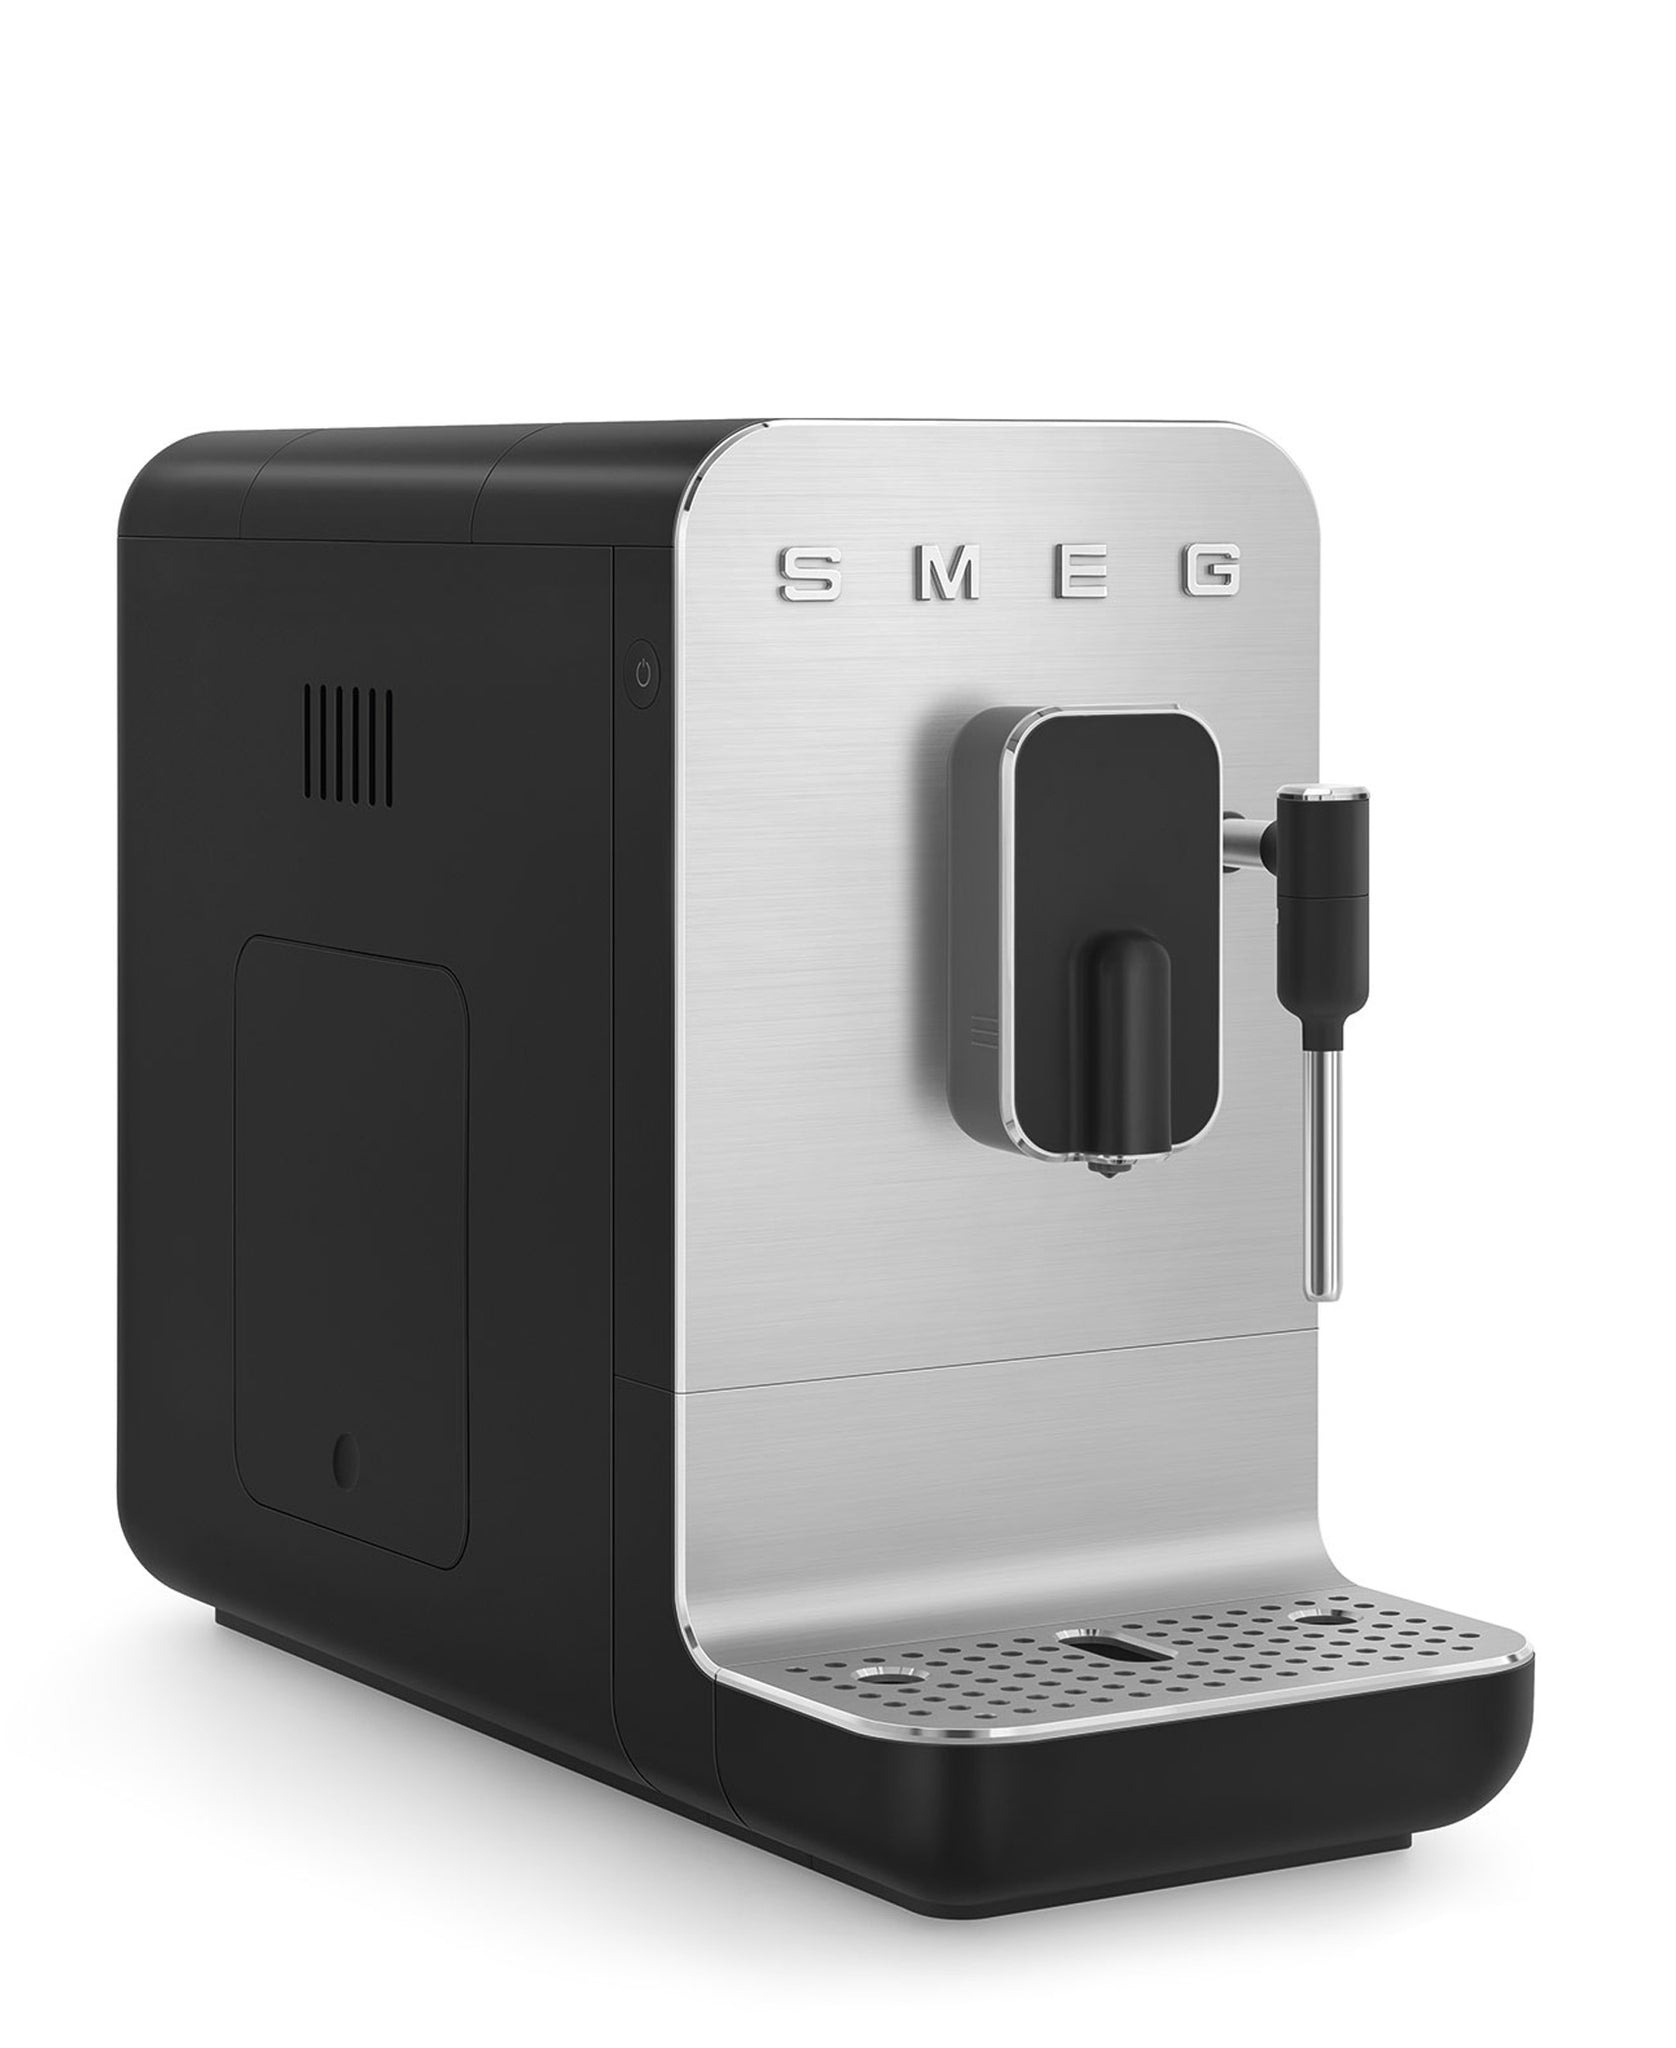 Smeg Espresso Automatic Coffee Machine - Black